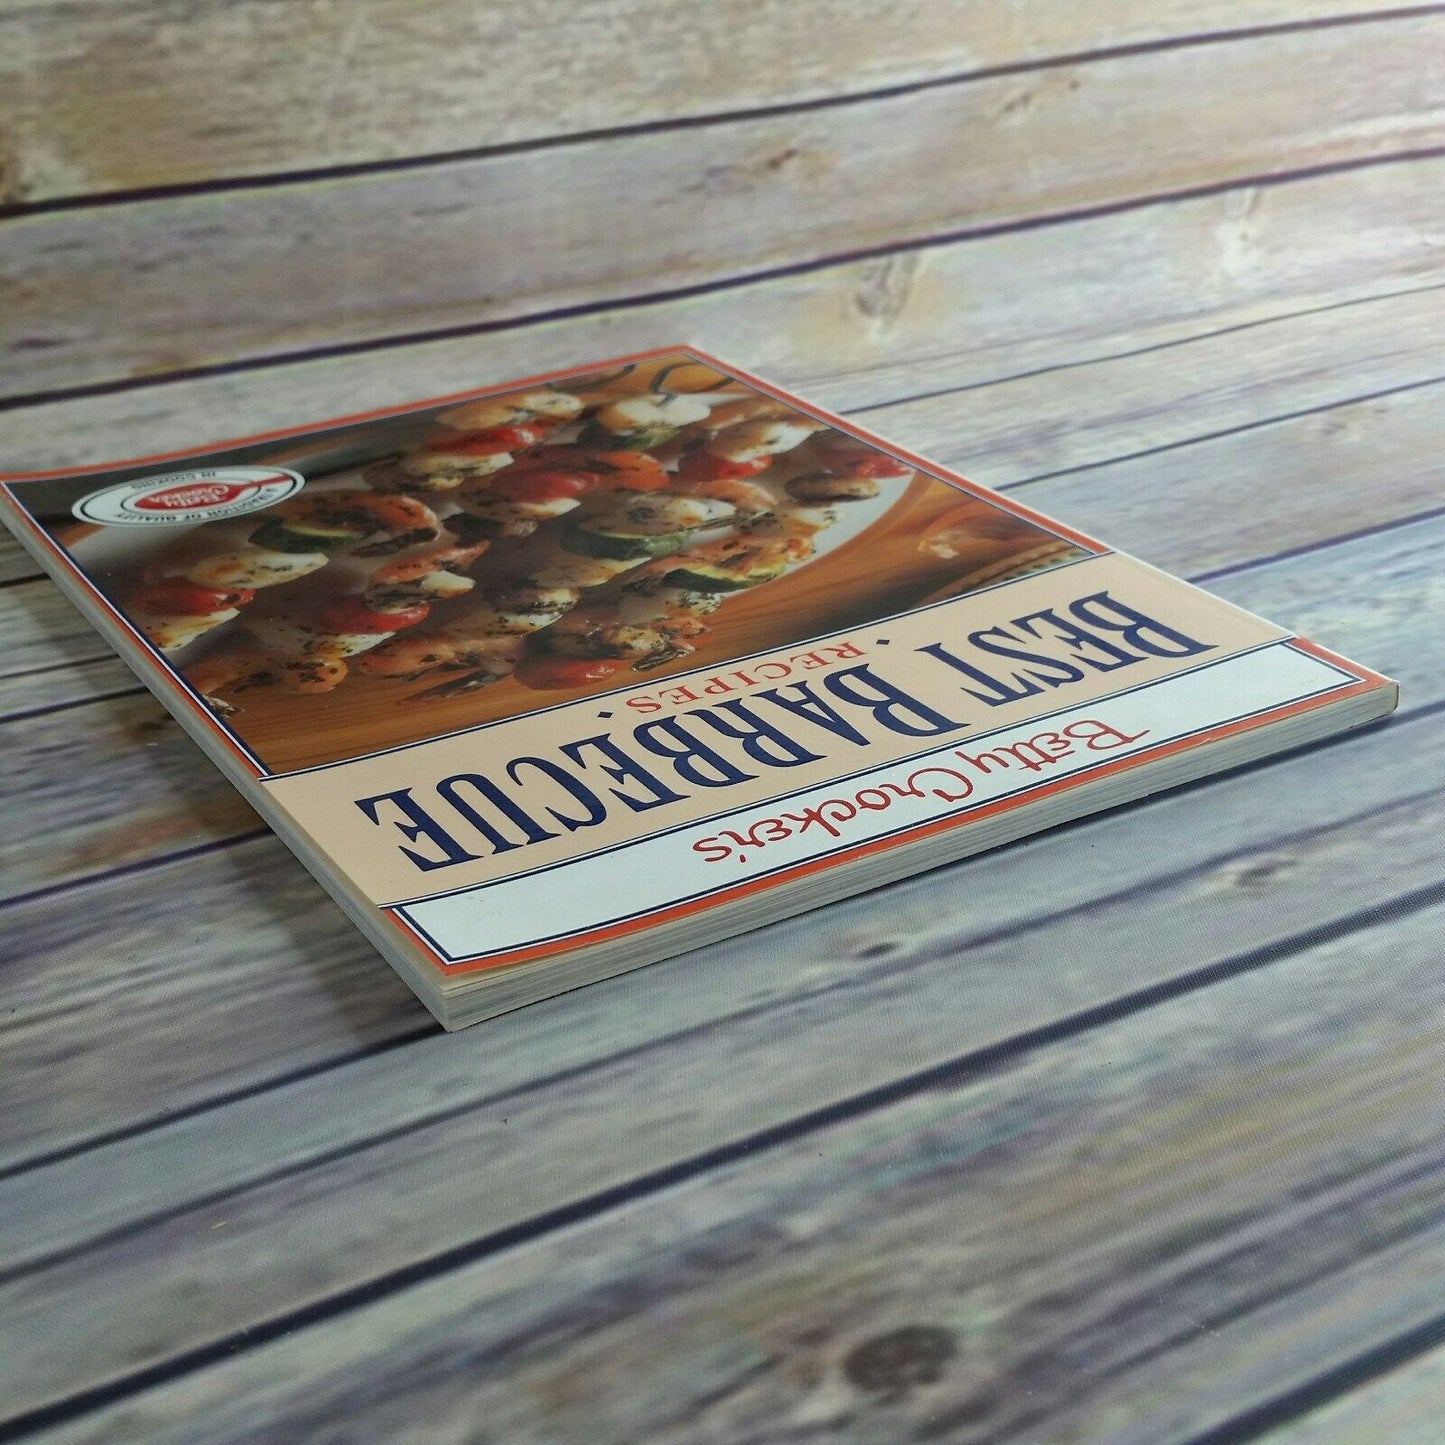 Vintage Cookbook Best Barbecue Recipes 1993 Betty Crocker Paperback Prentice Hall